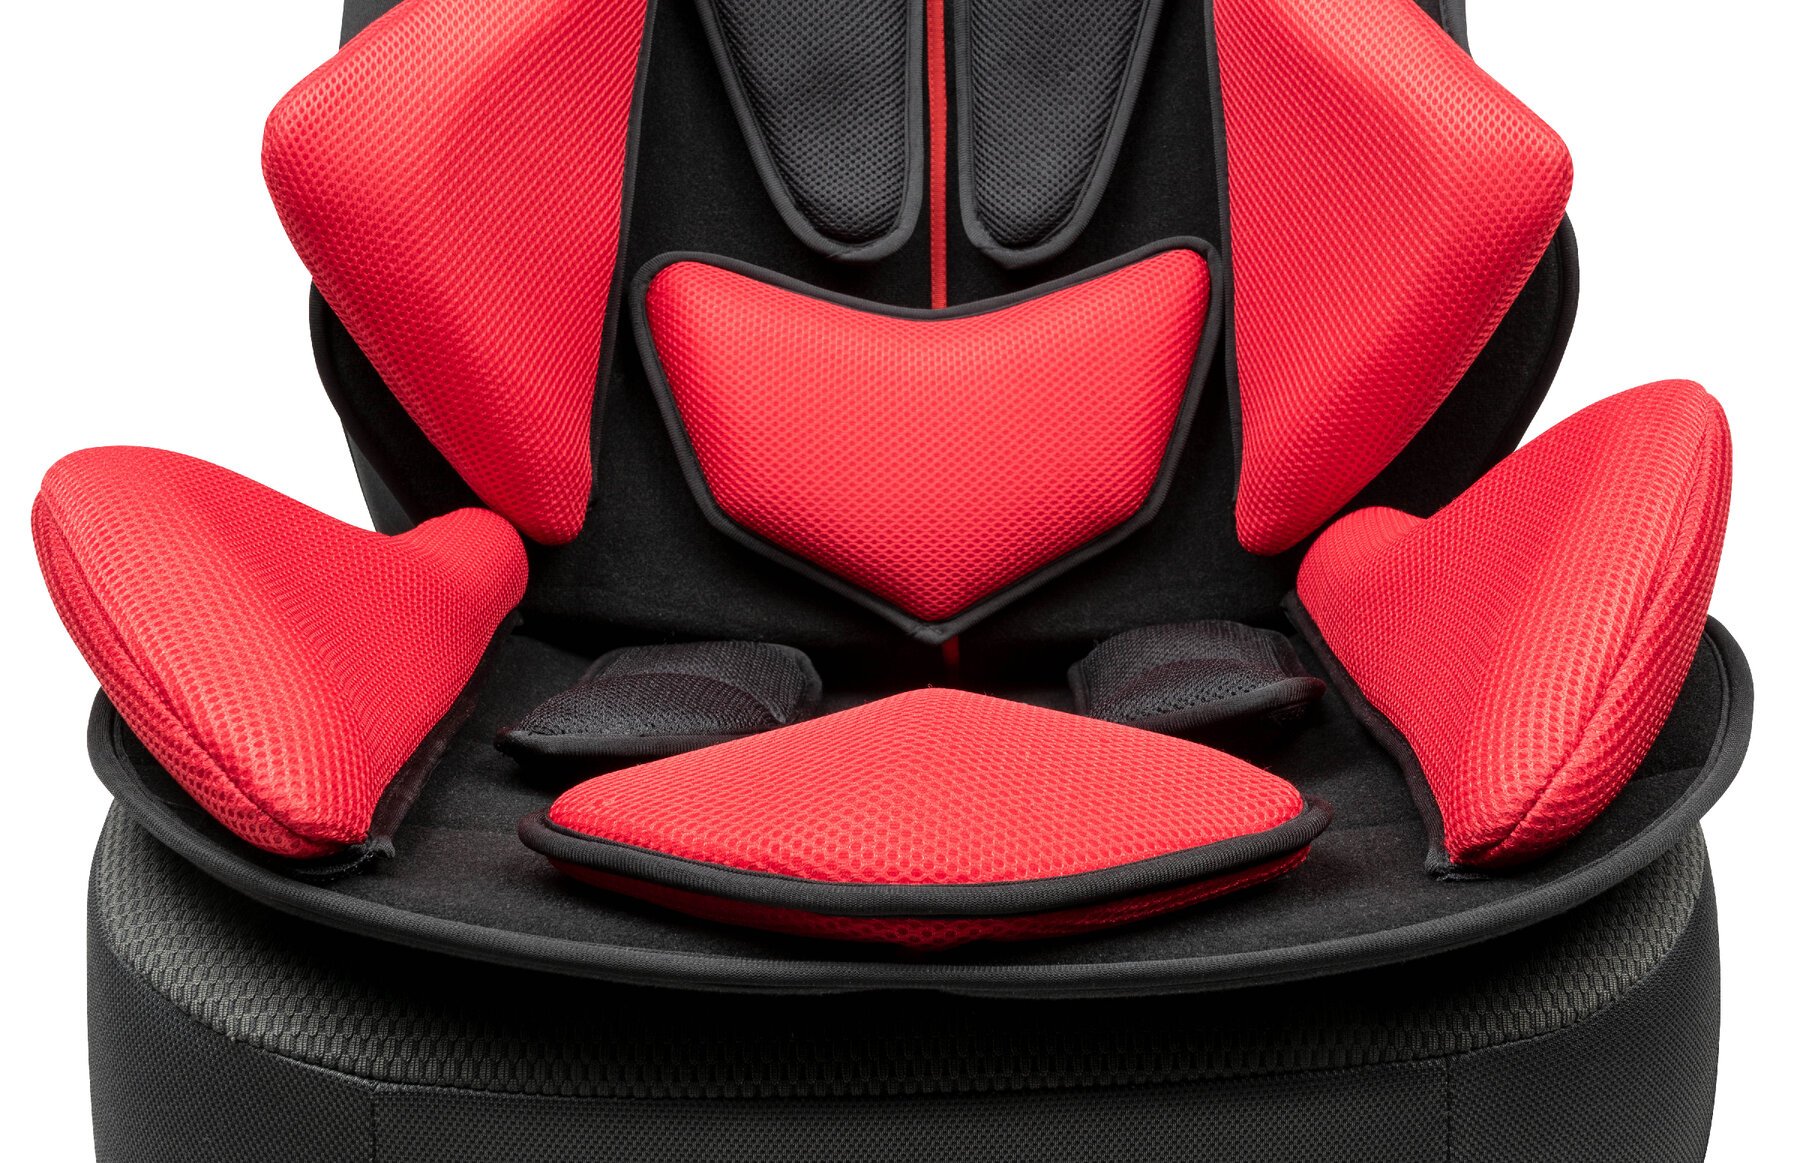 PKW Sitzauflage X-Race schwarz rot